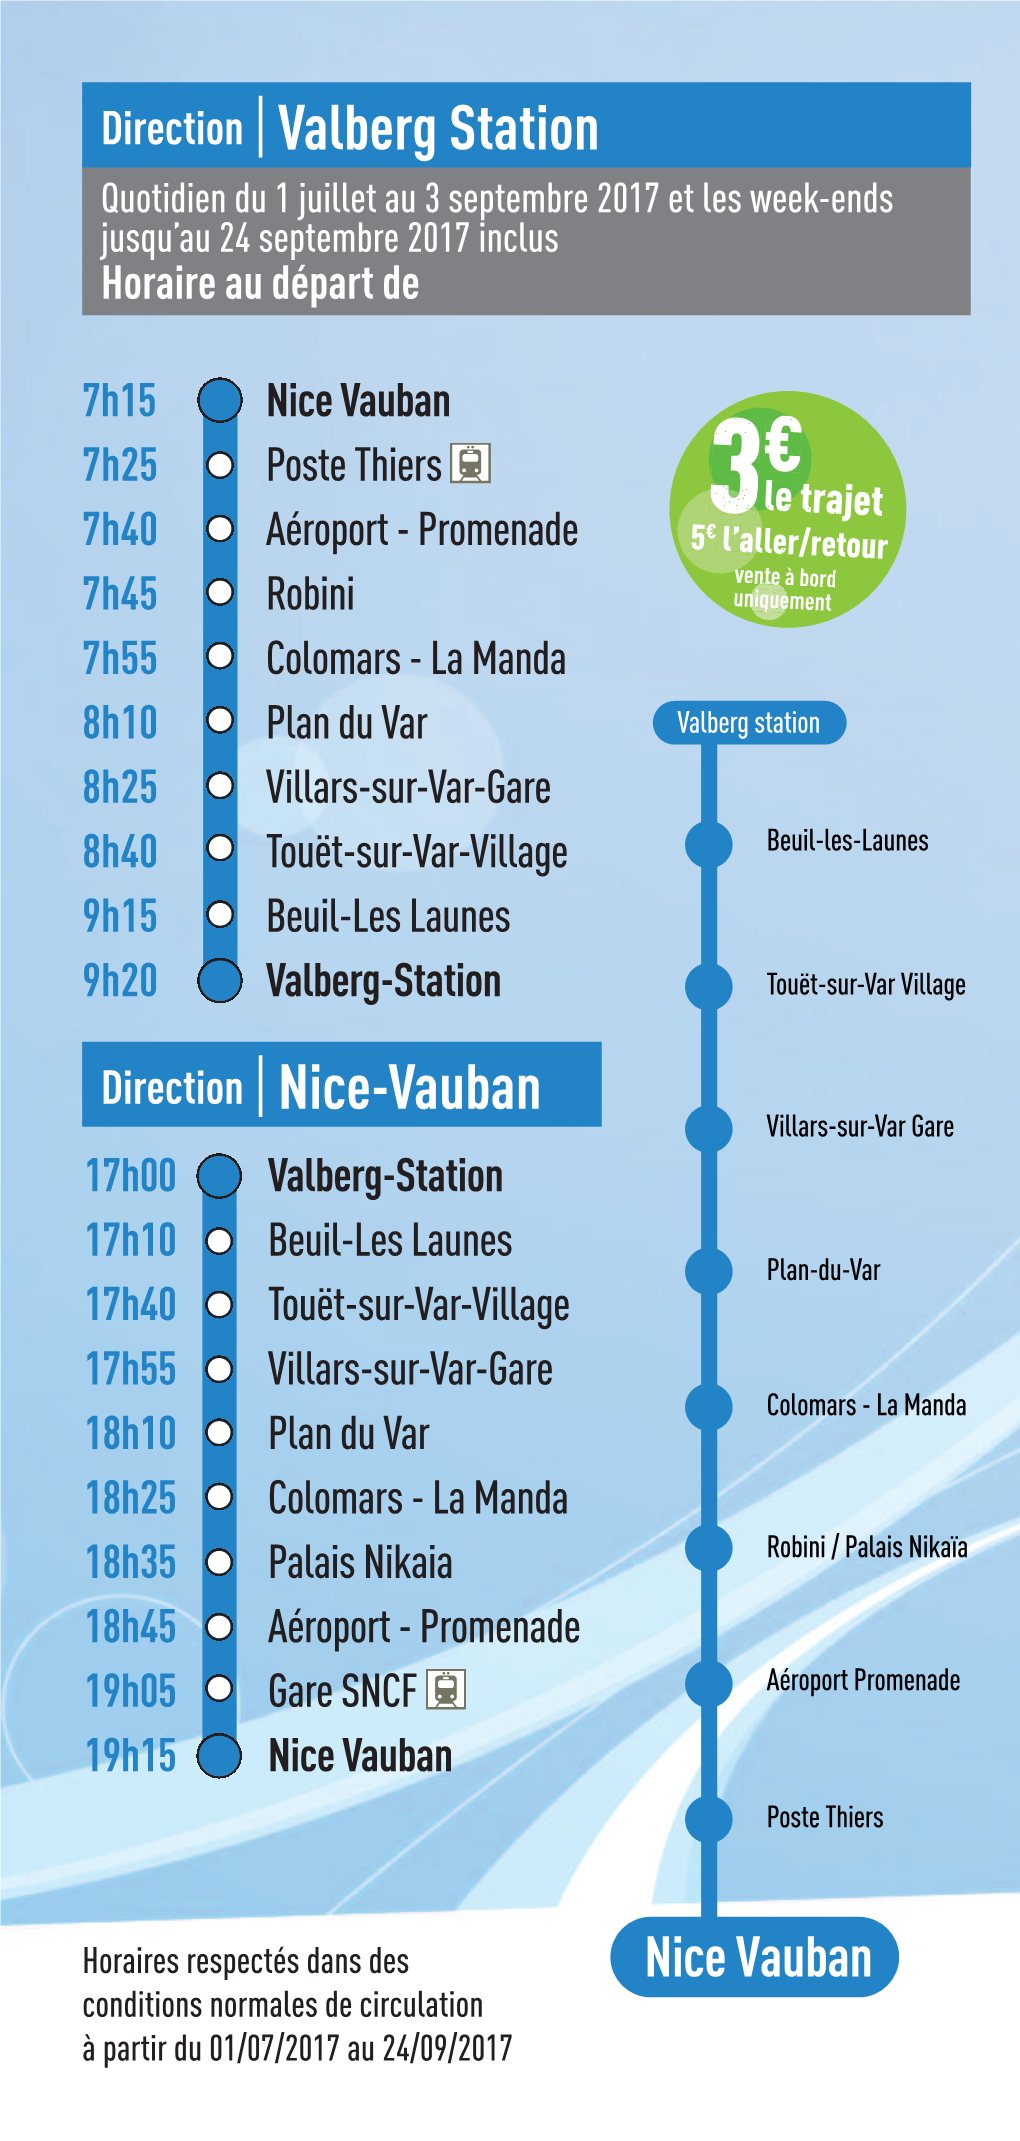 Direction Nice-Vauban Direction Valberg Station